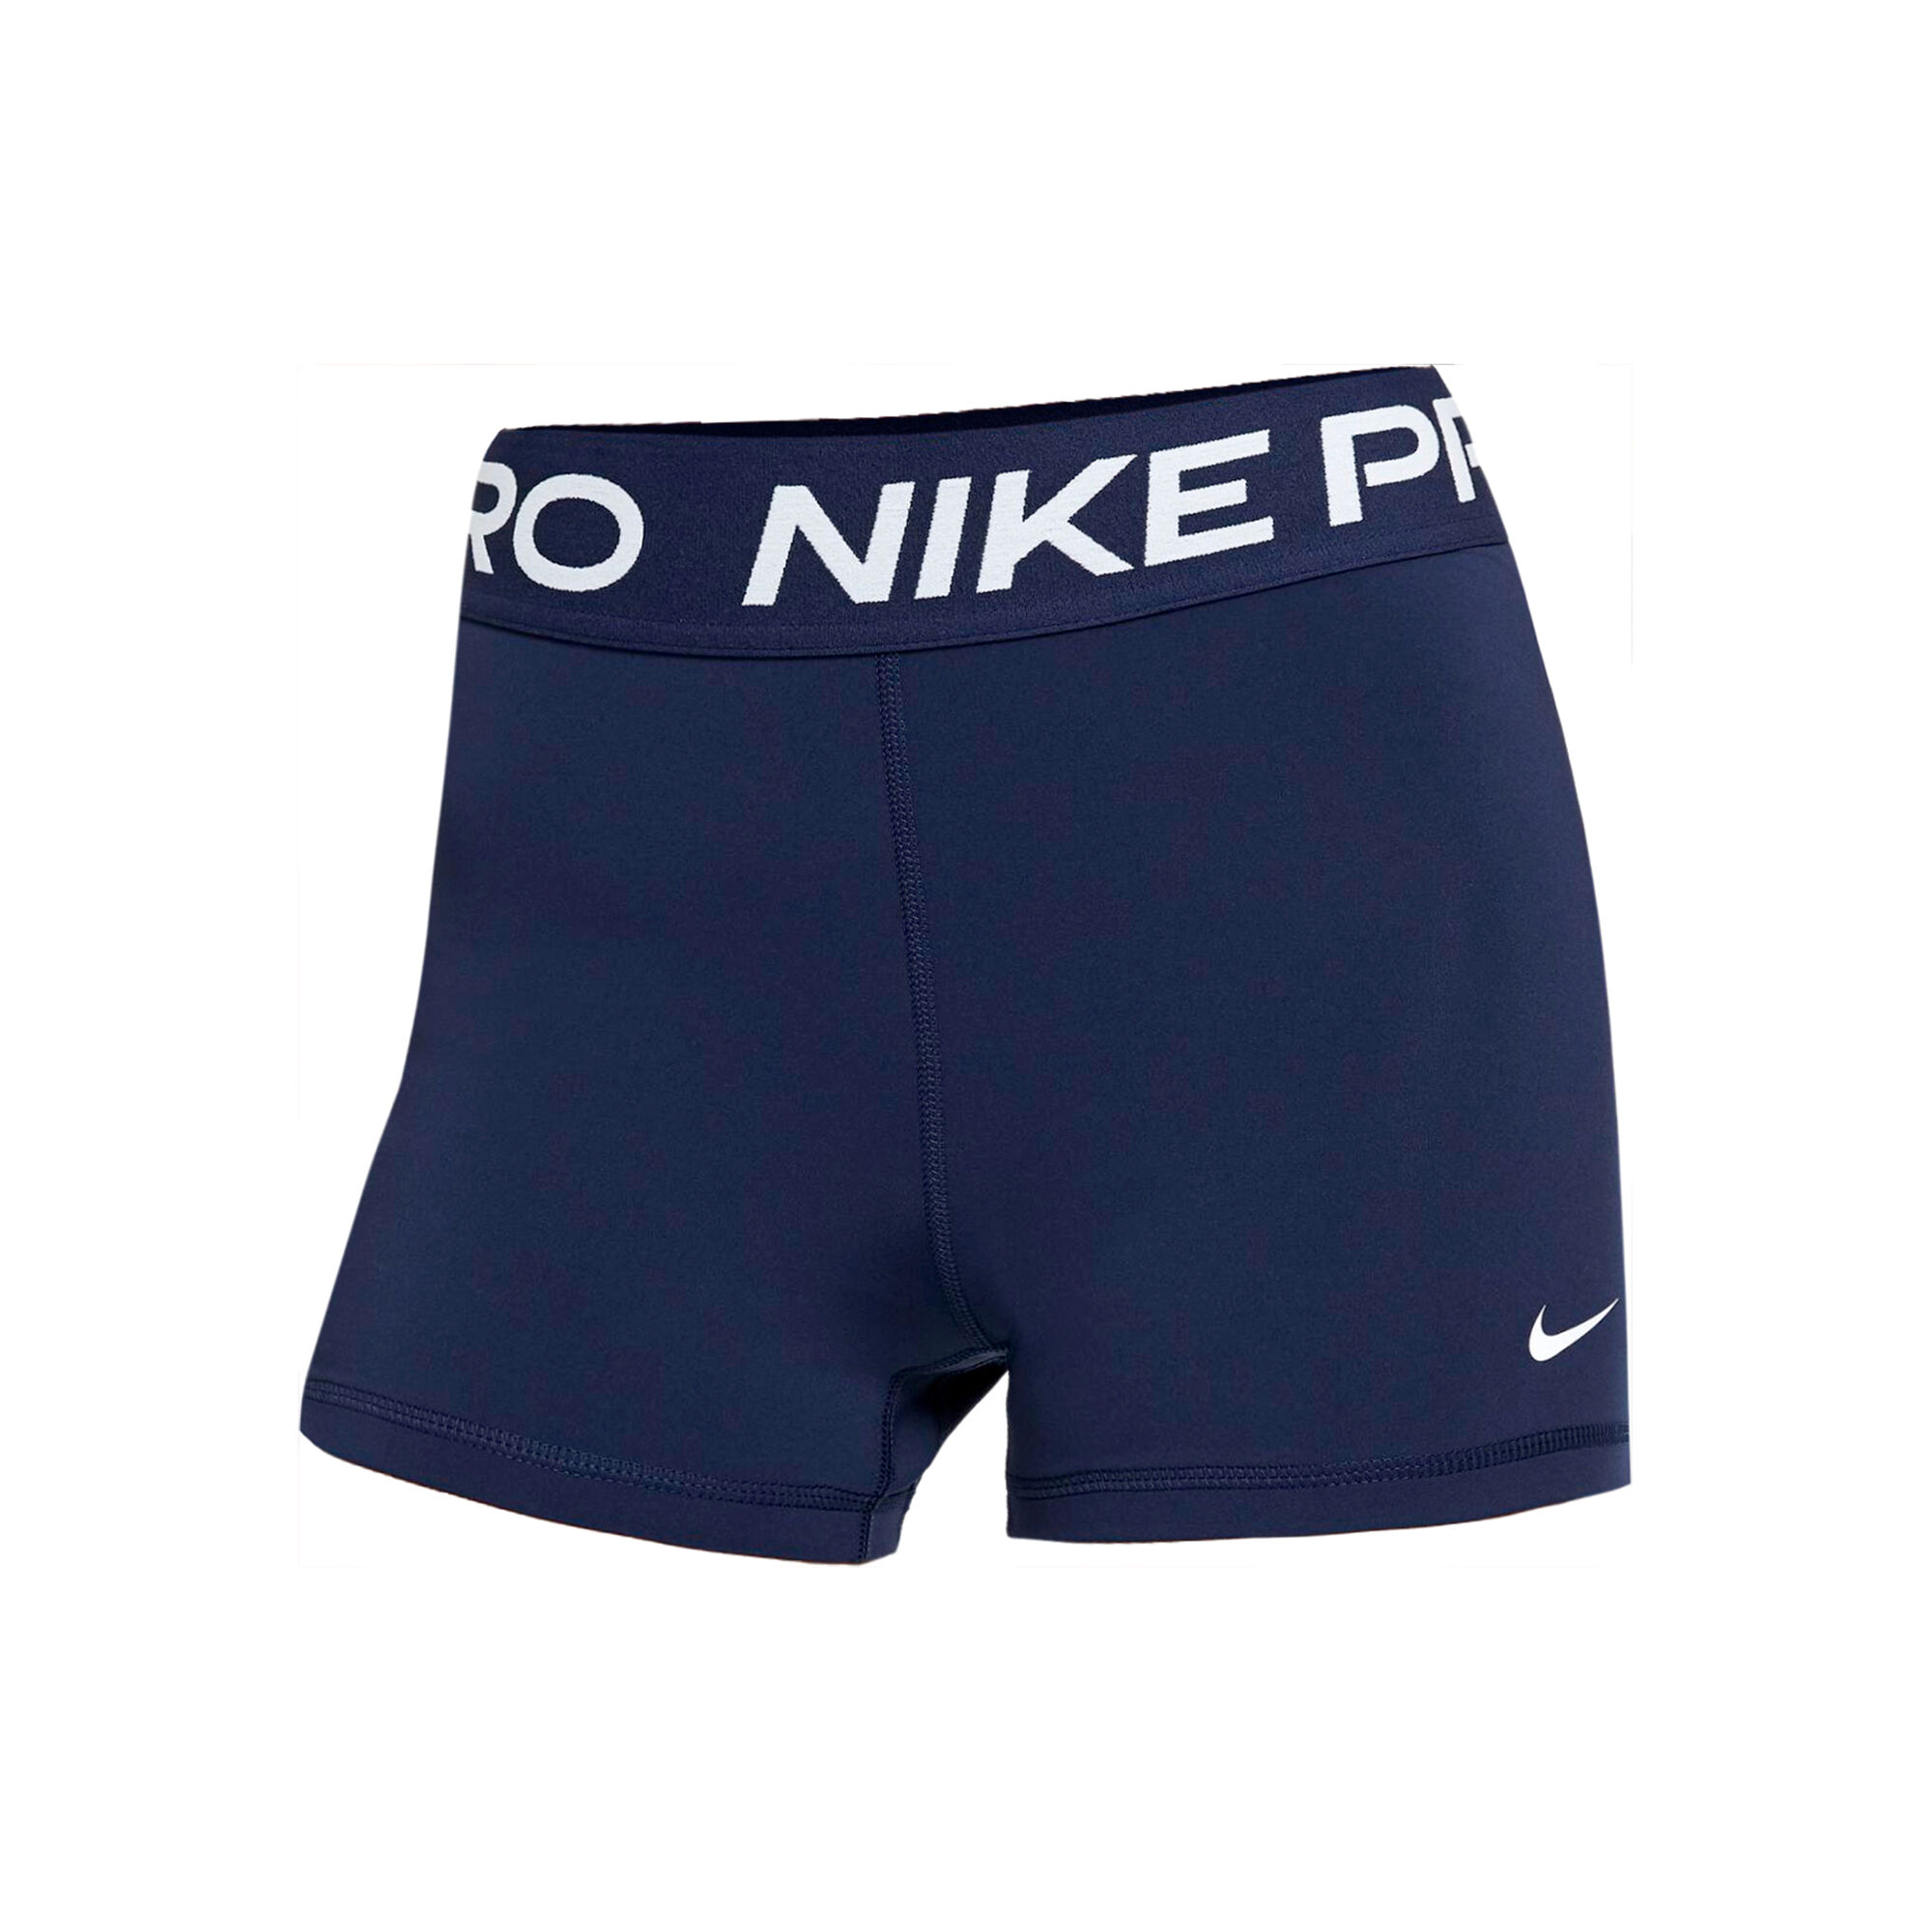 Buy Nike Pro 3in Shorts Women Dark Blue, White online